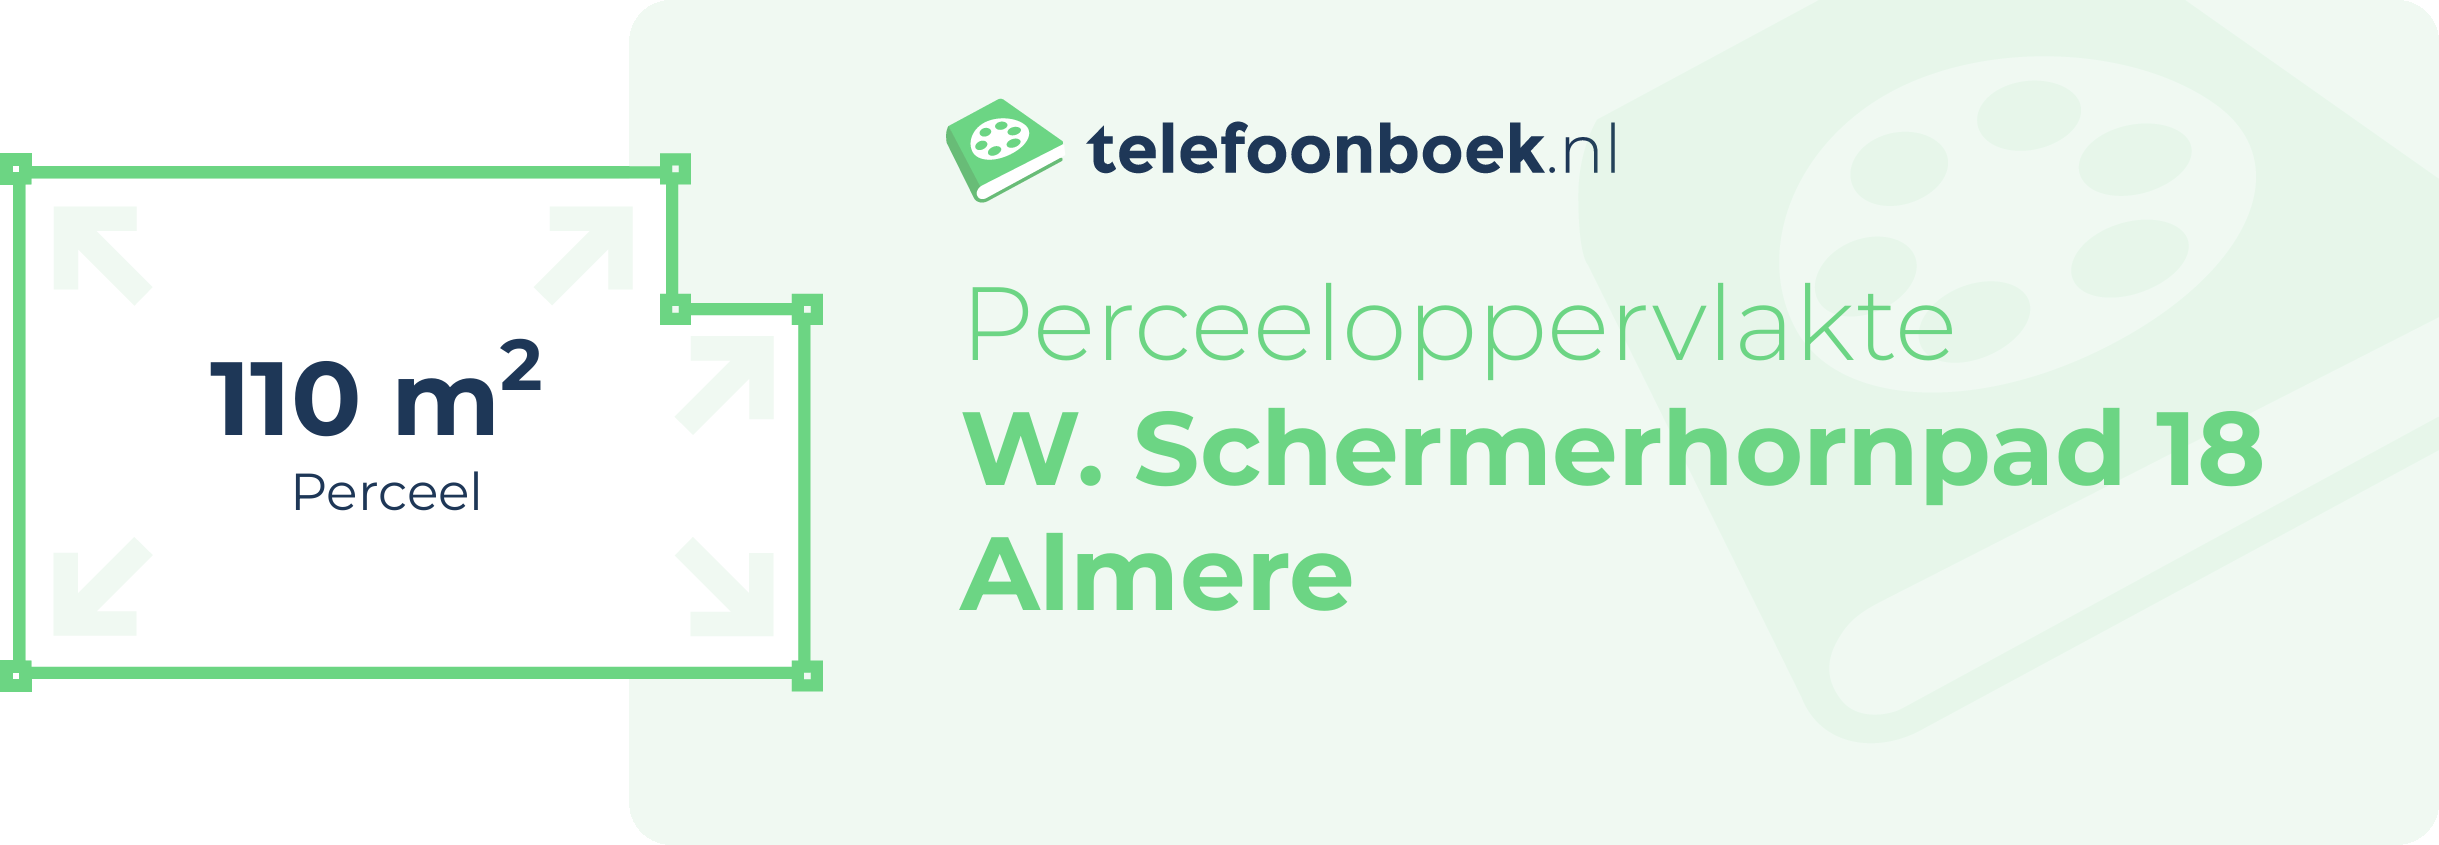 Perceeloppervlakte W. Schermerhornpad 18 Almere